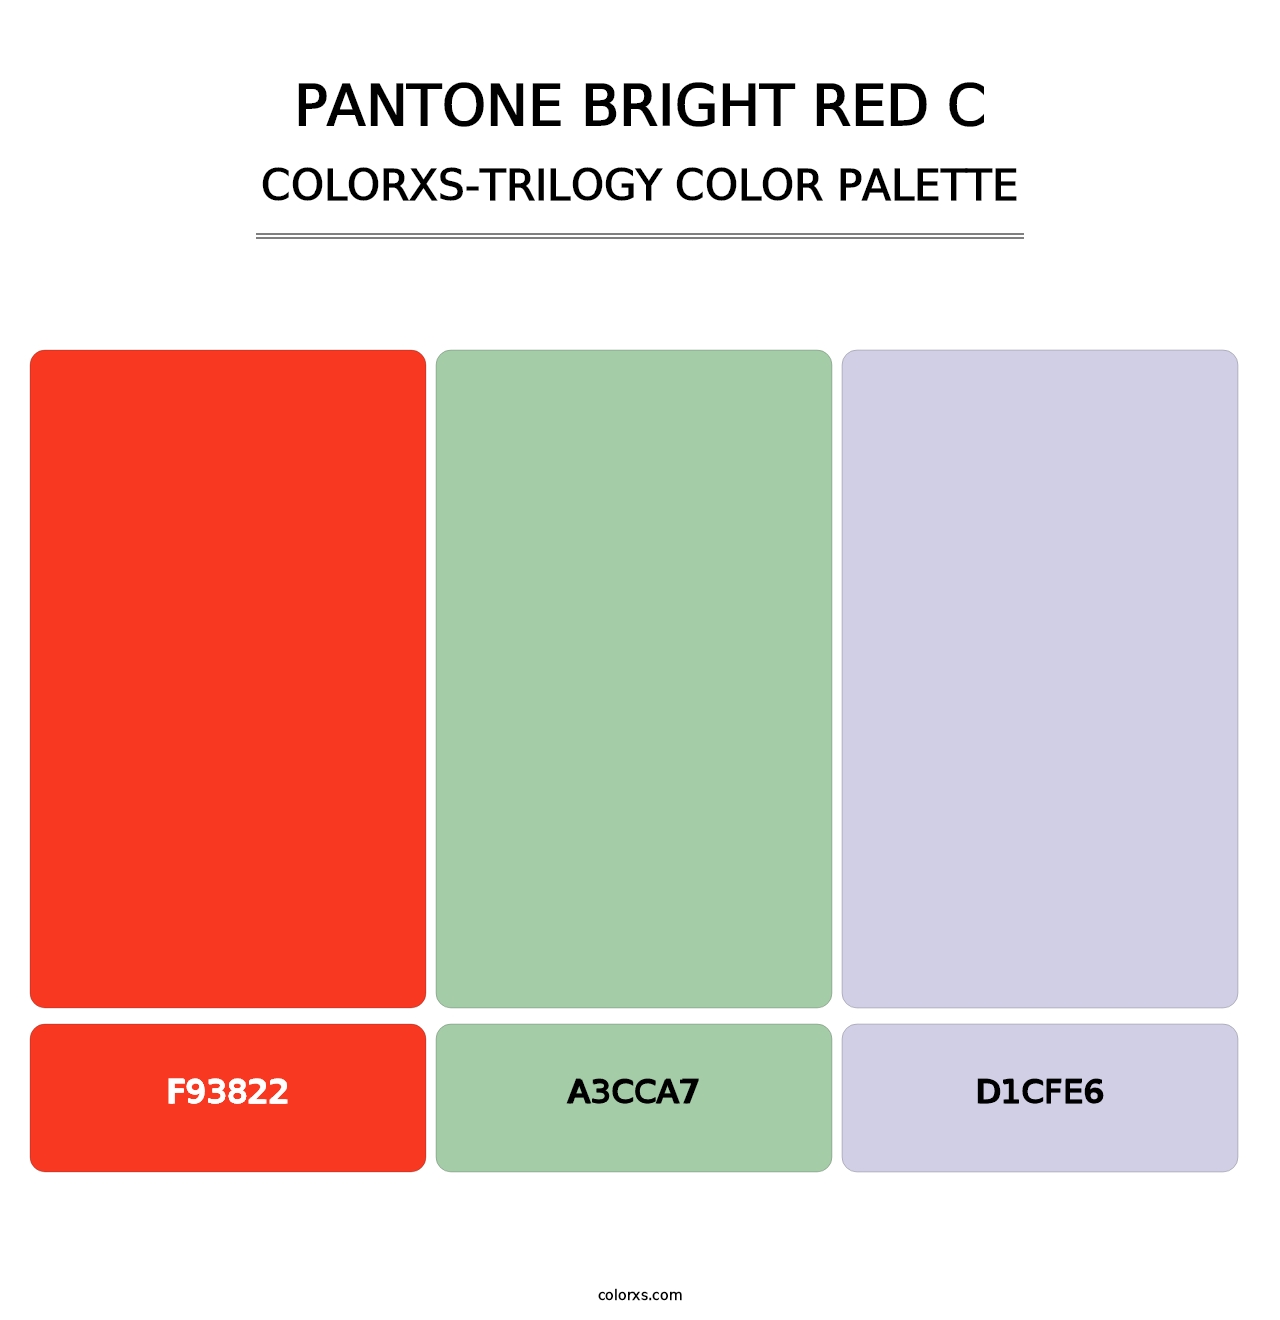 PANTONE Bright Red C - Colorxs Trilogy Palette